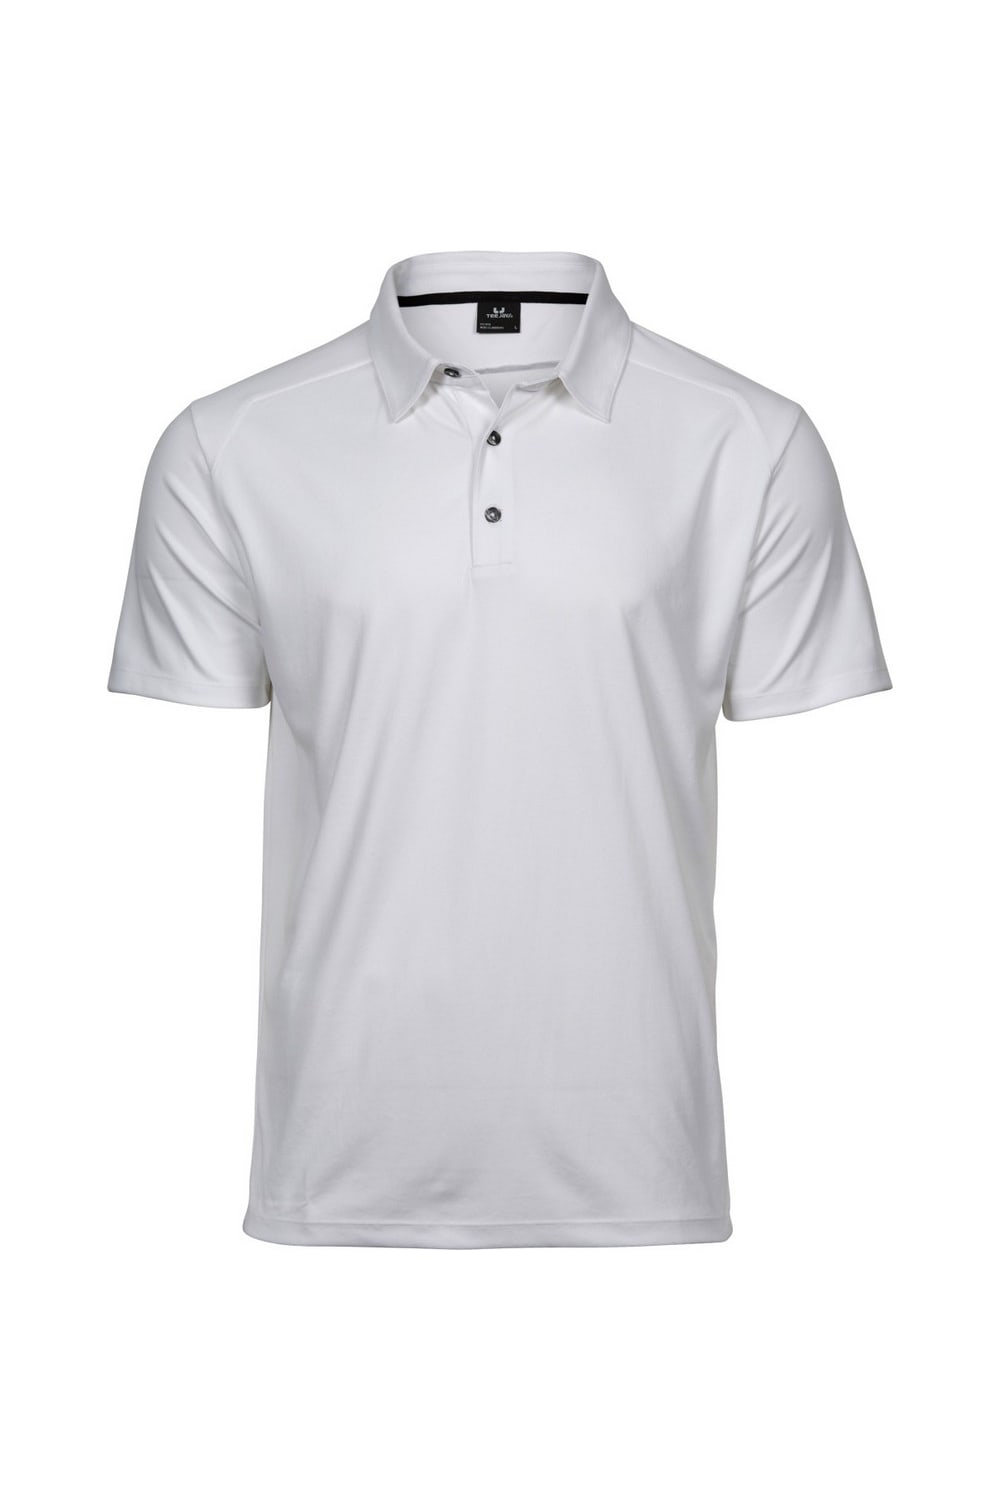 Tee Jays Mens Luxury Sport Polo Shirt (White)